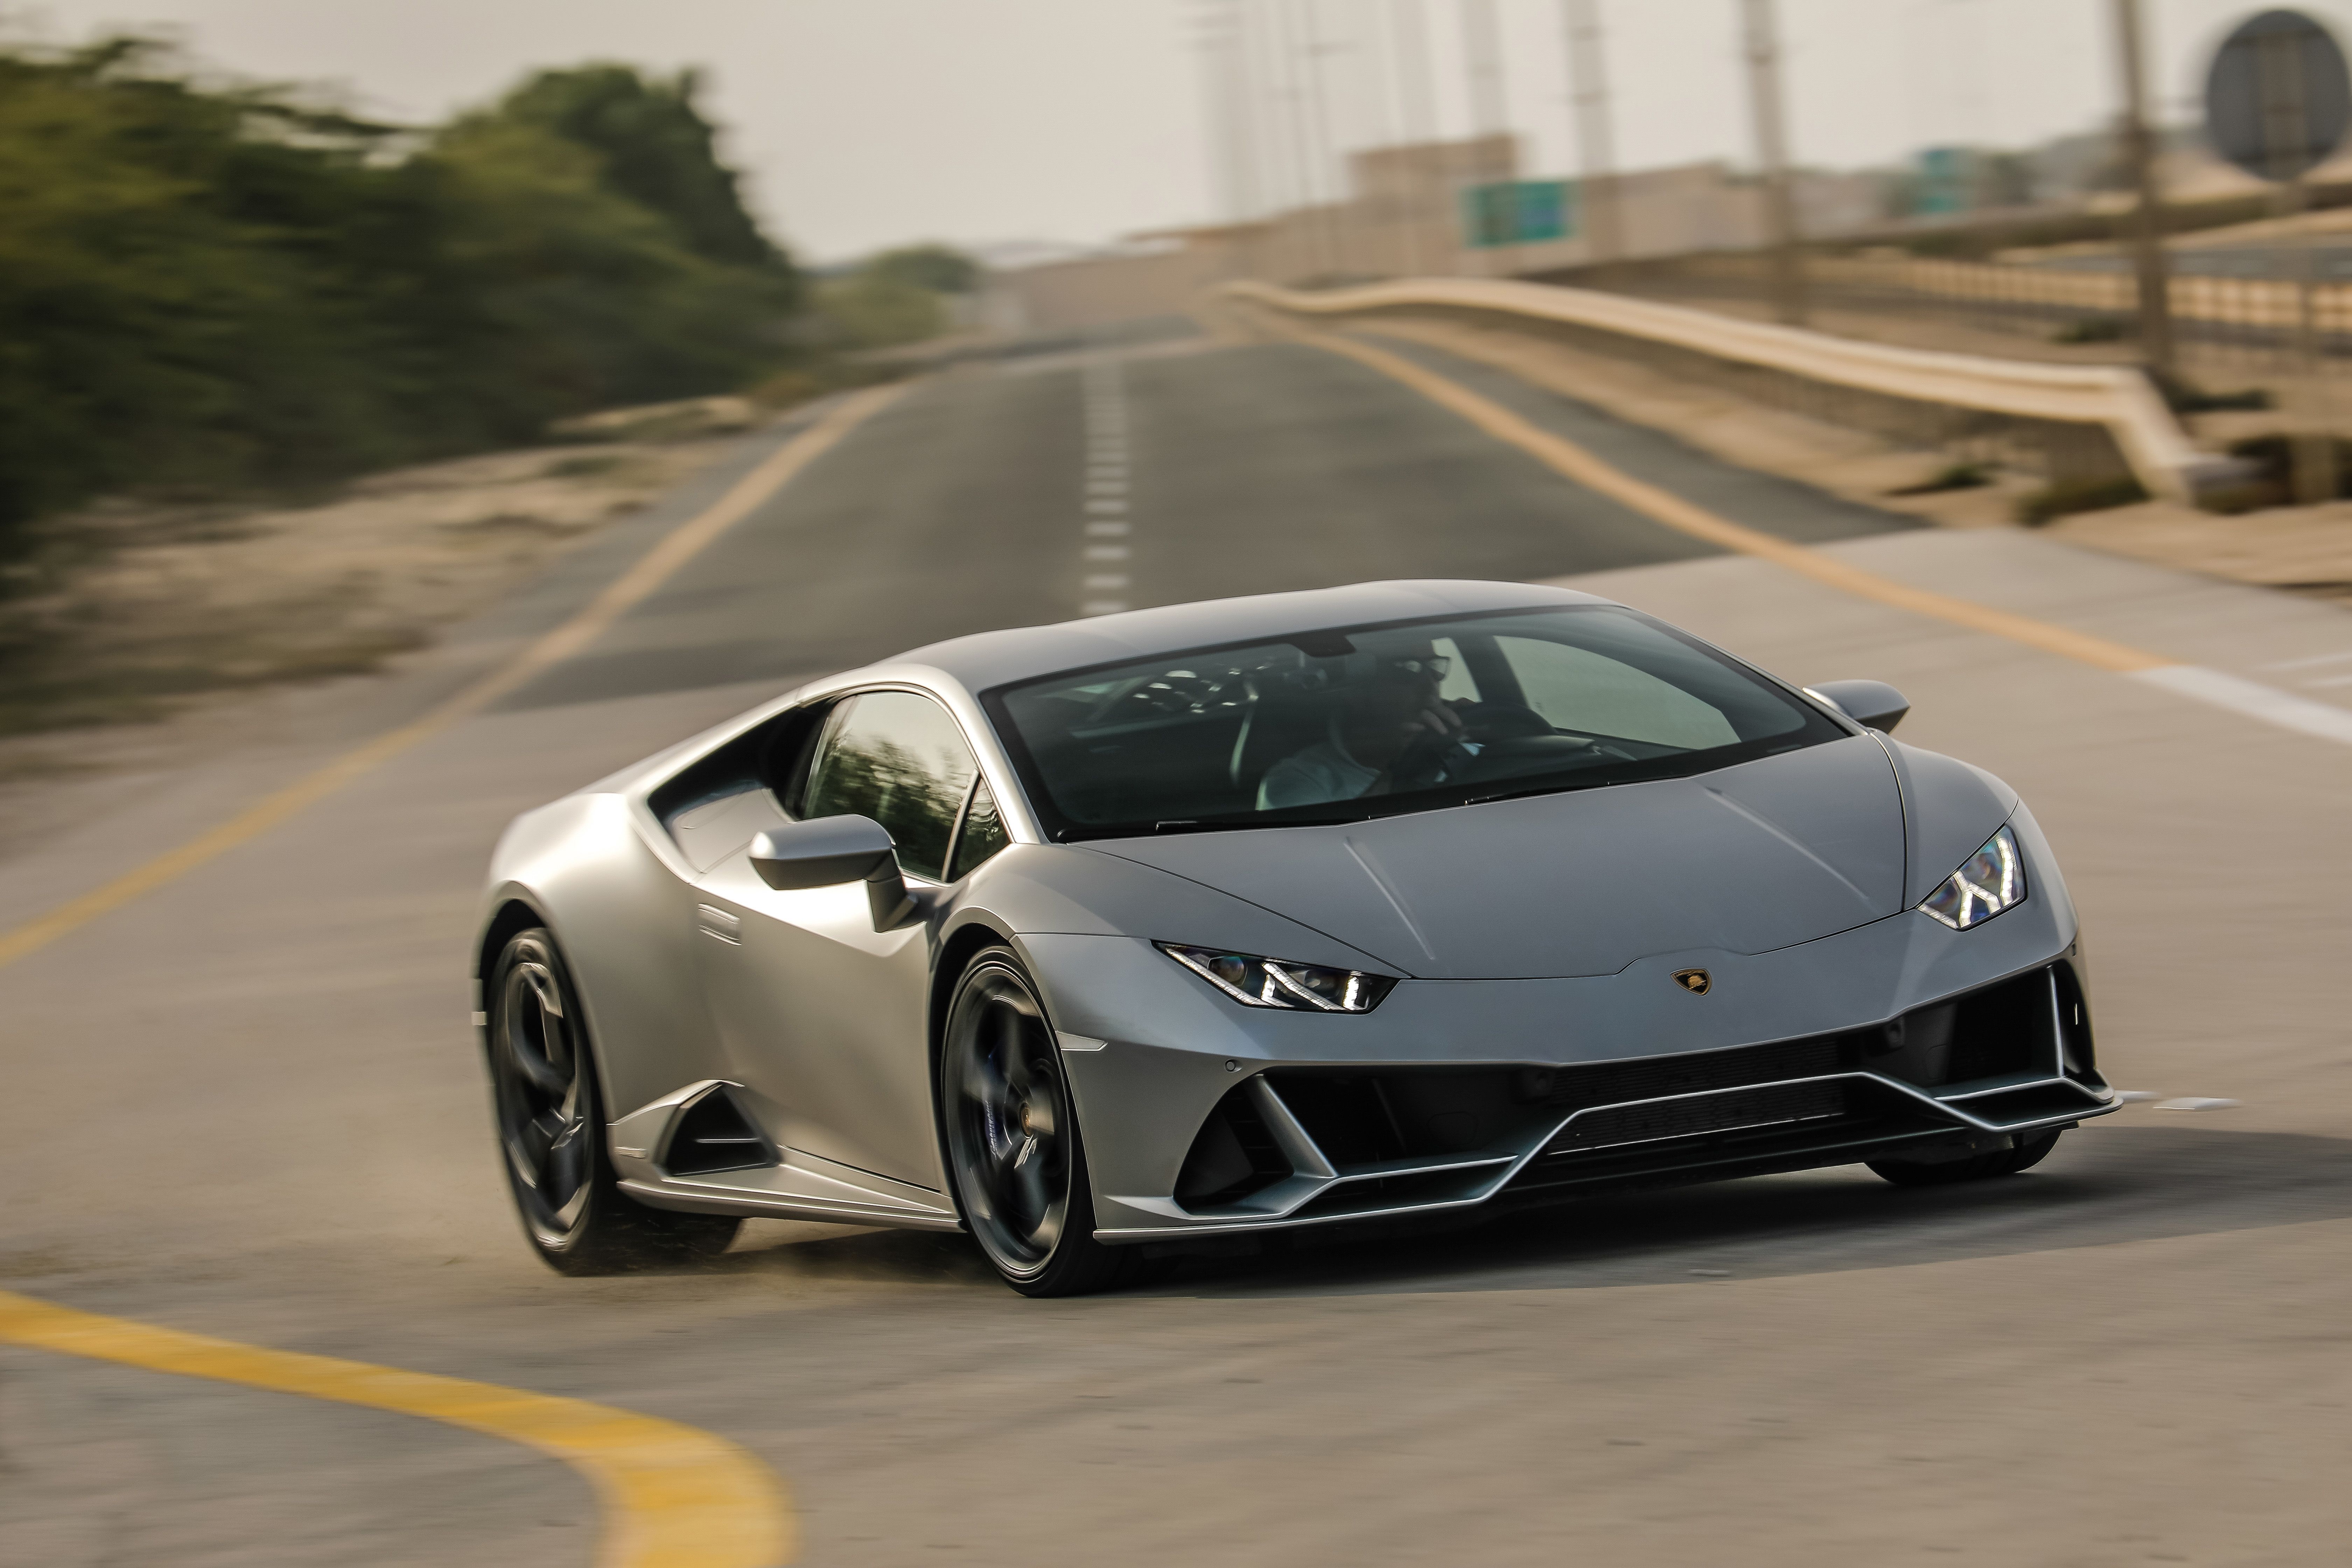 2020 Lamborghini Huracán Review, Pricing, and Specs